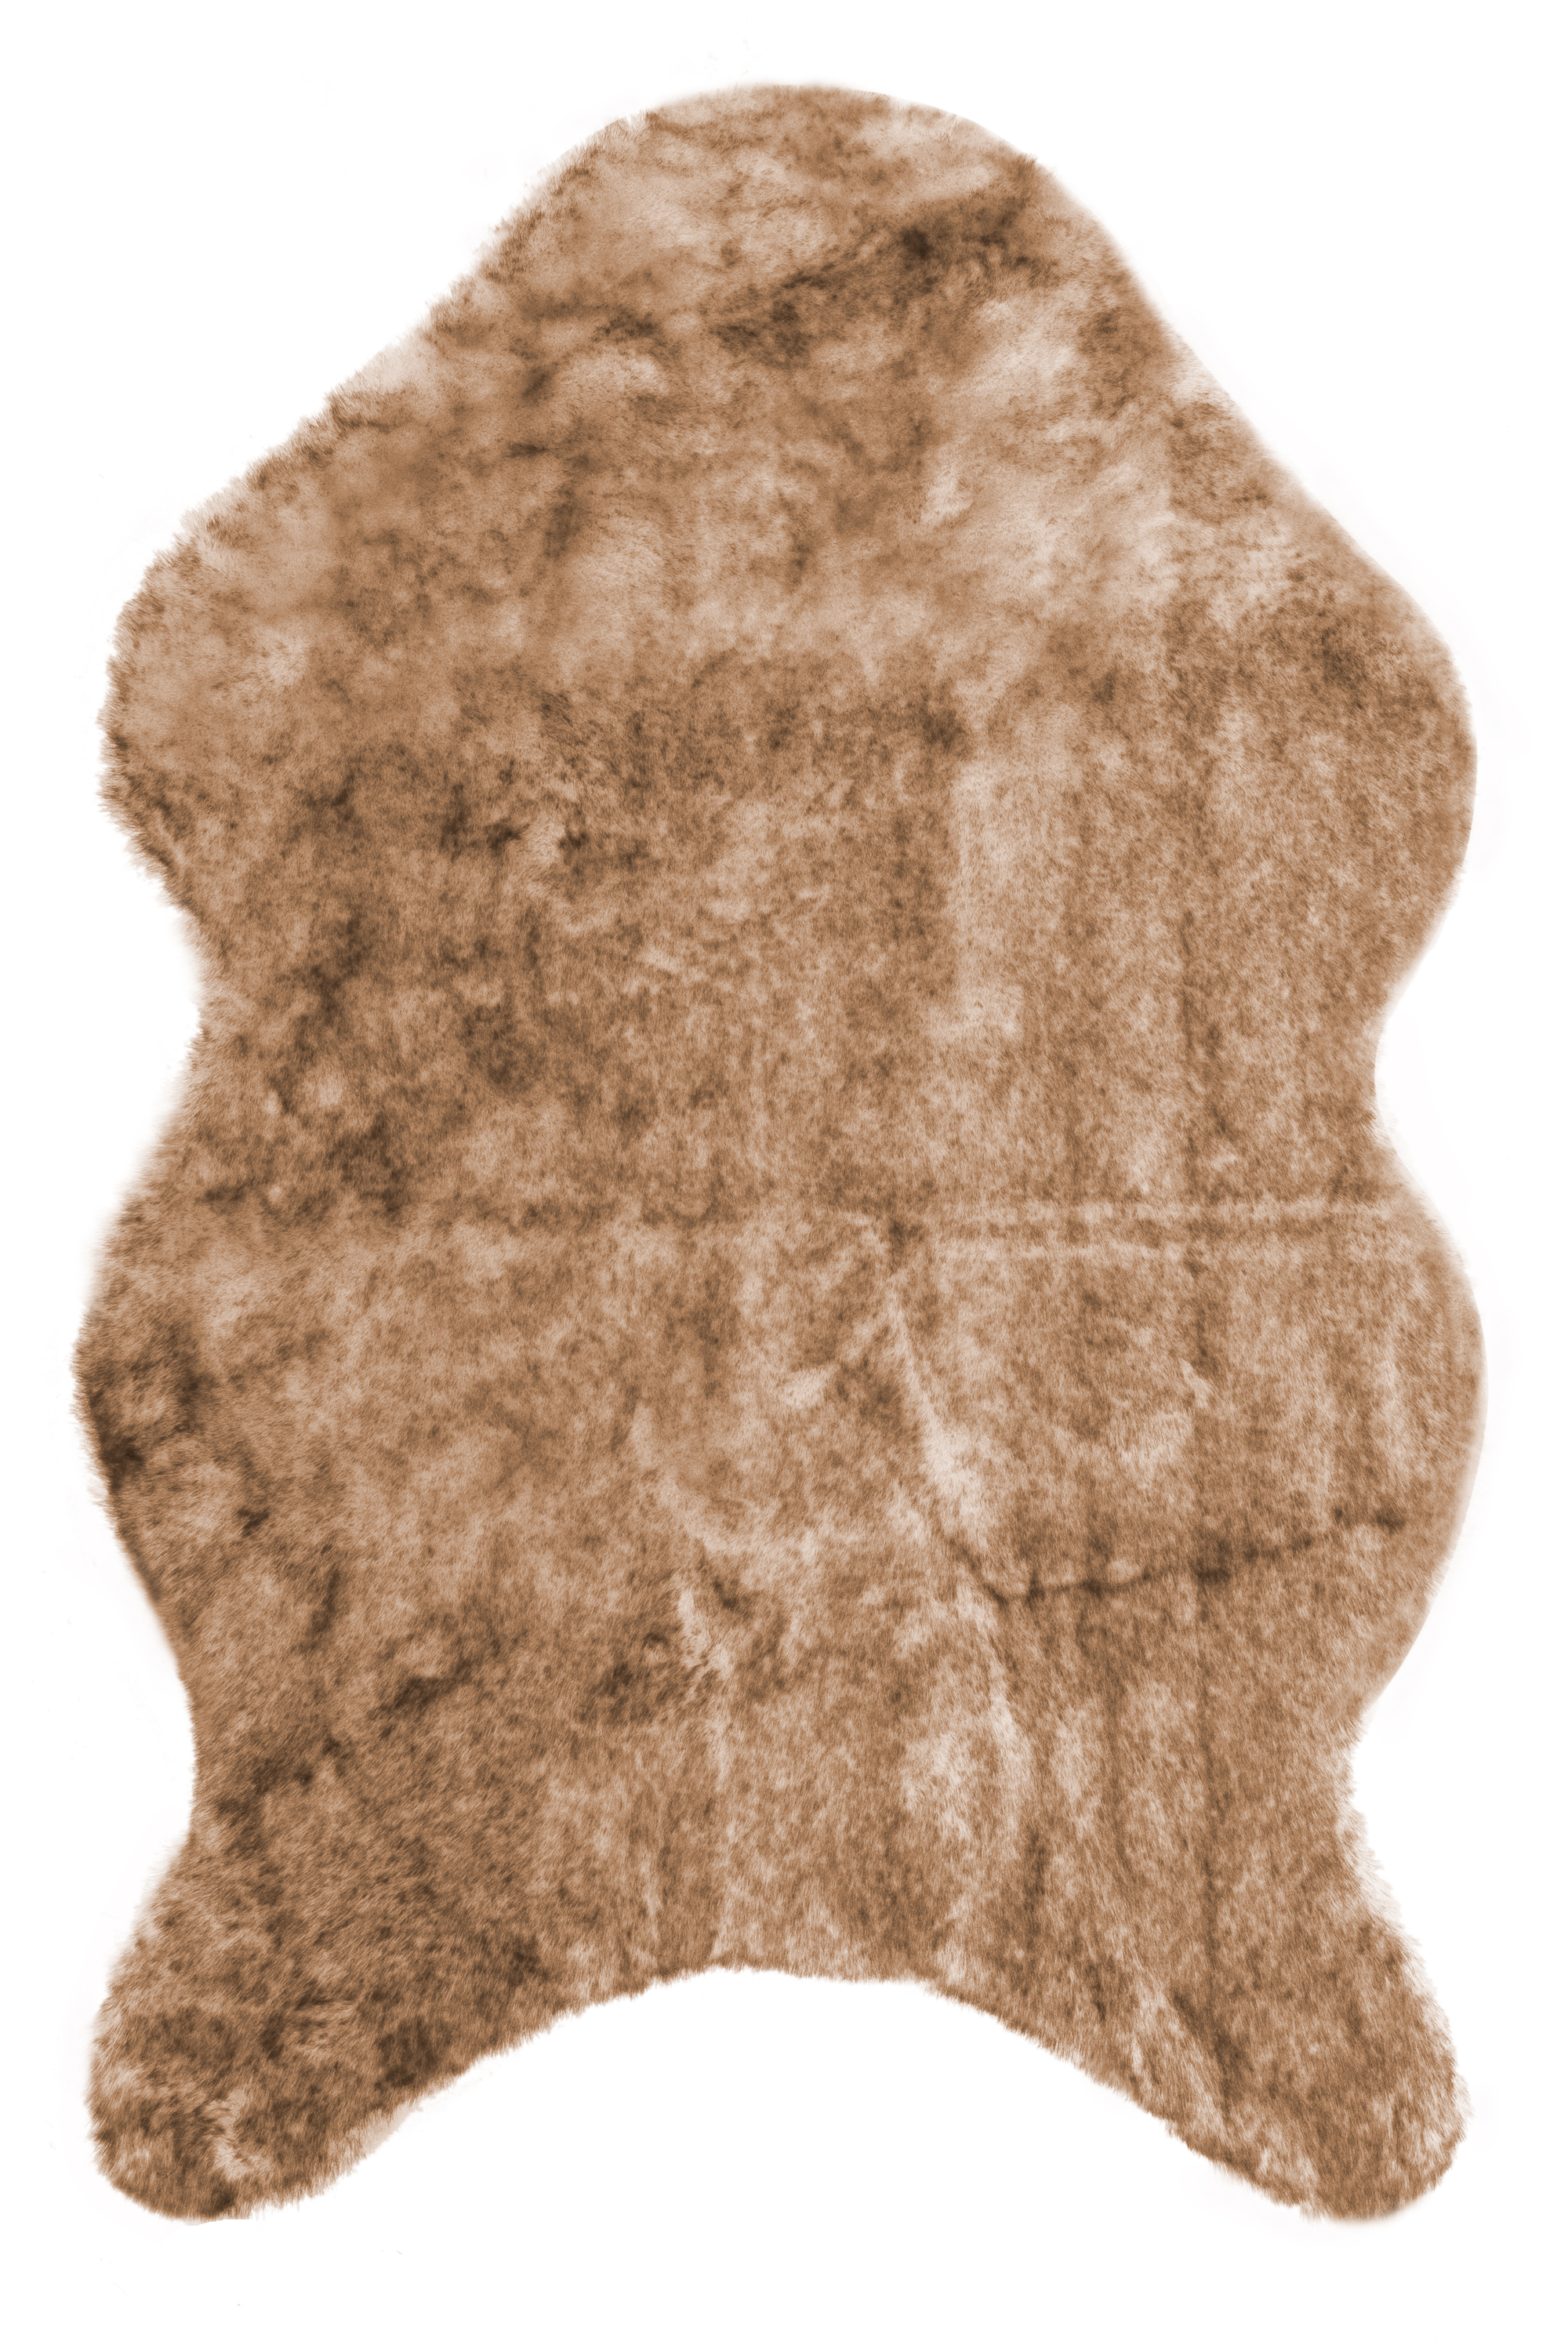 Carpet MELANGE rabbit fur - 60x90cm, light brown